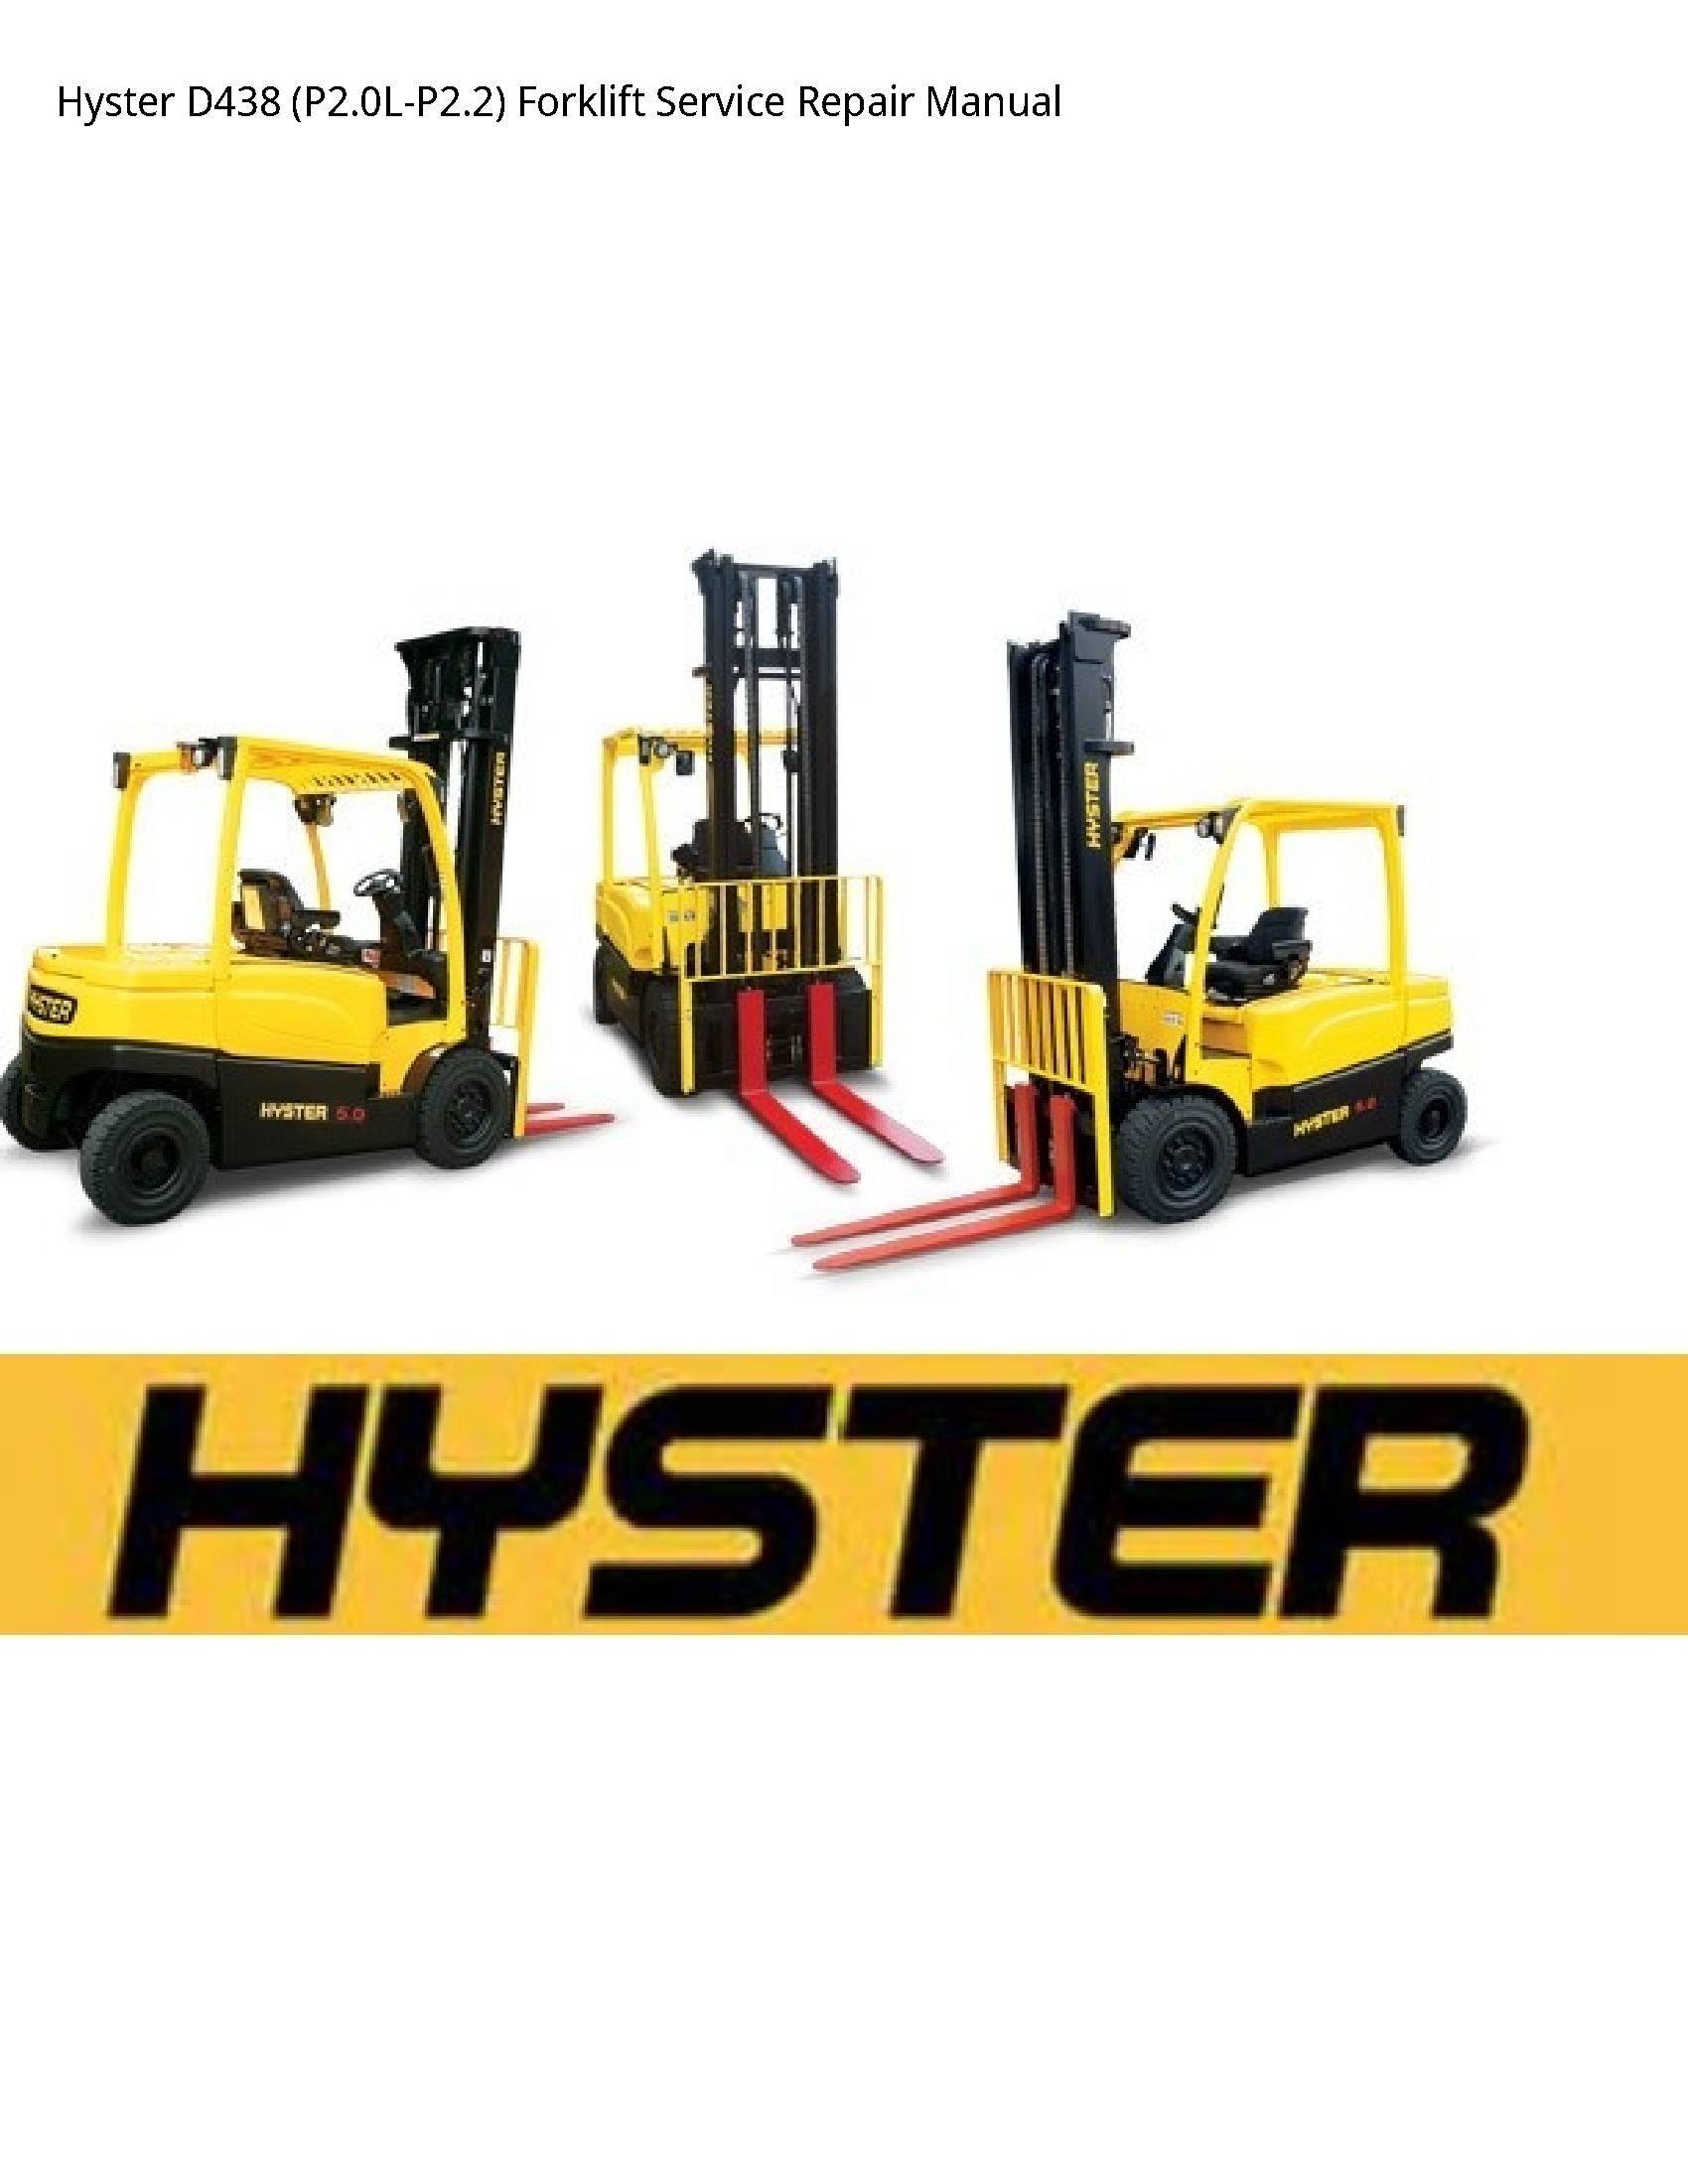 Hyster D438 Forklift manual